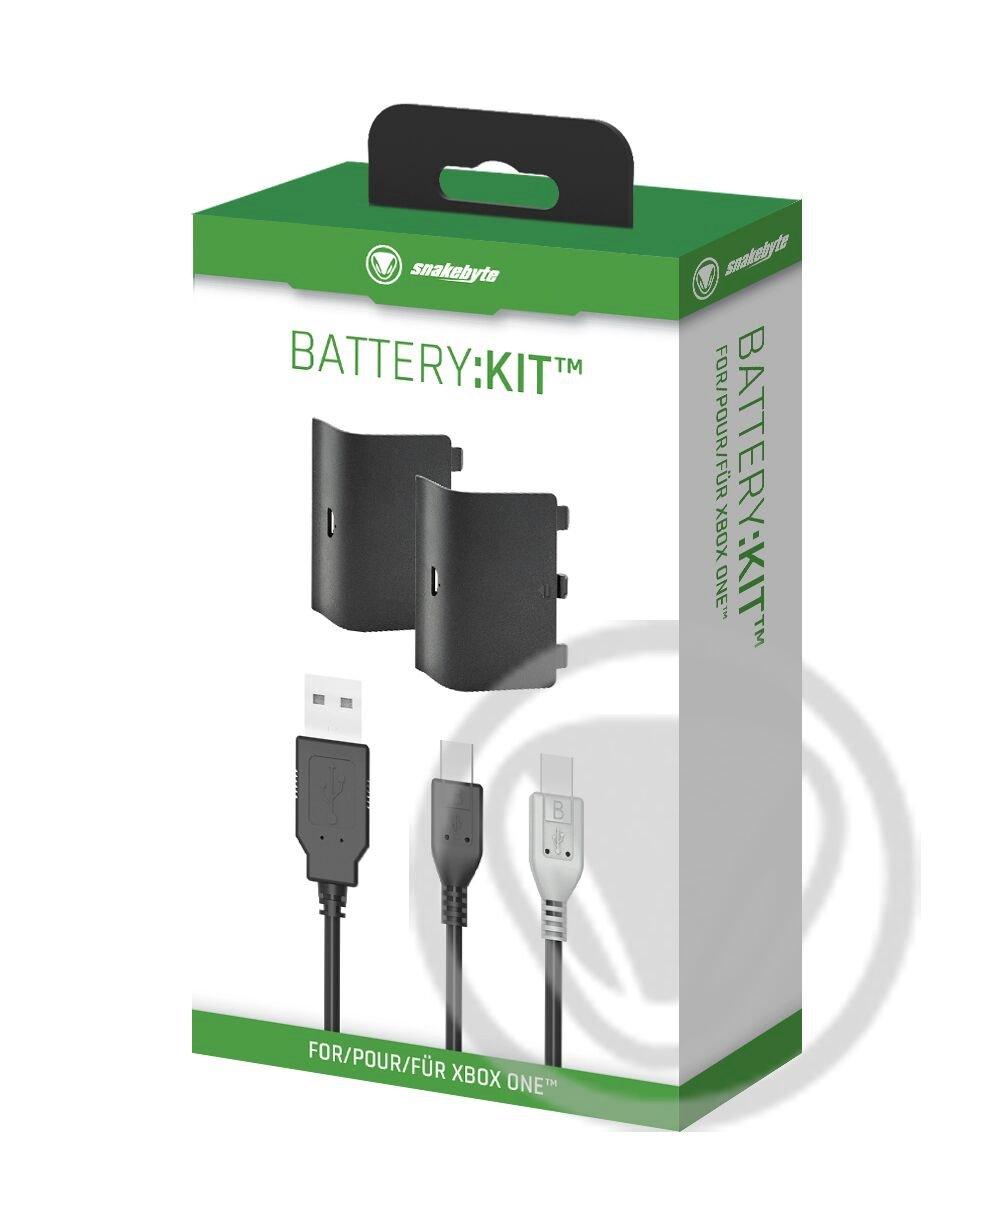 gamestop xbox rechargeable battery